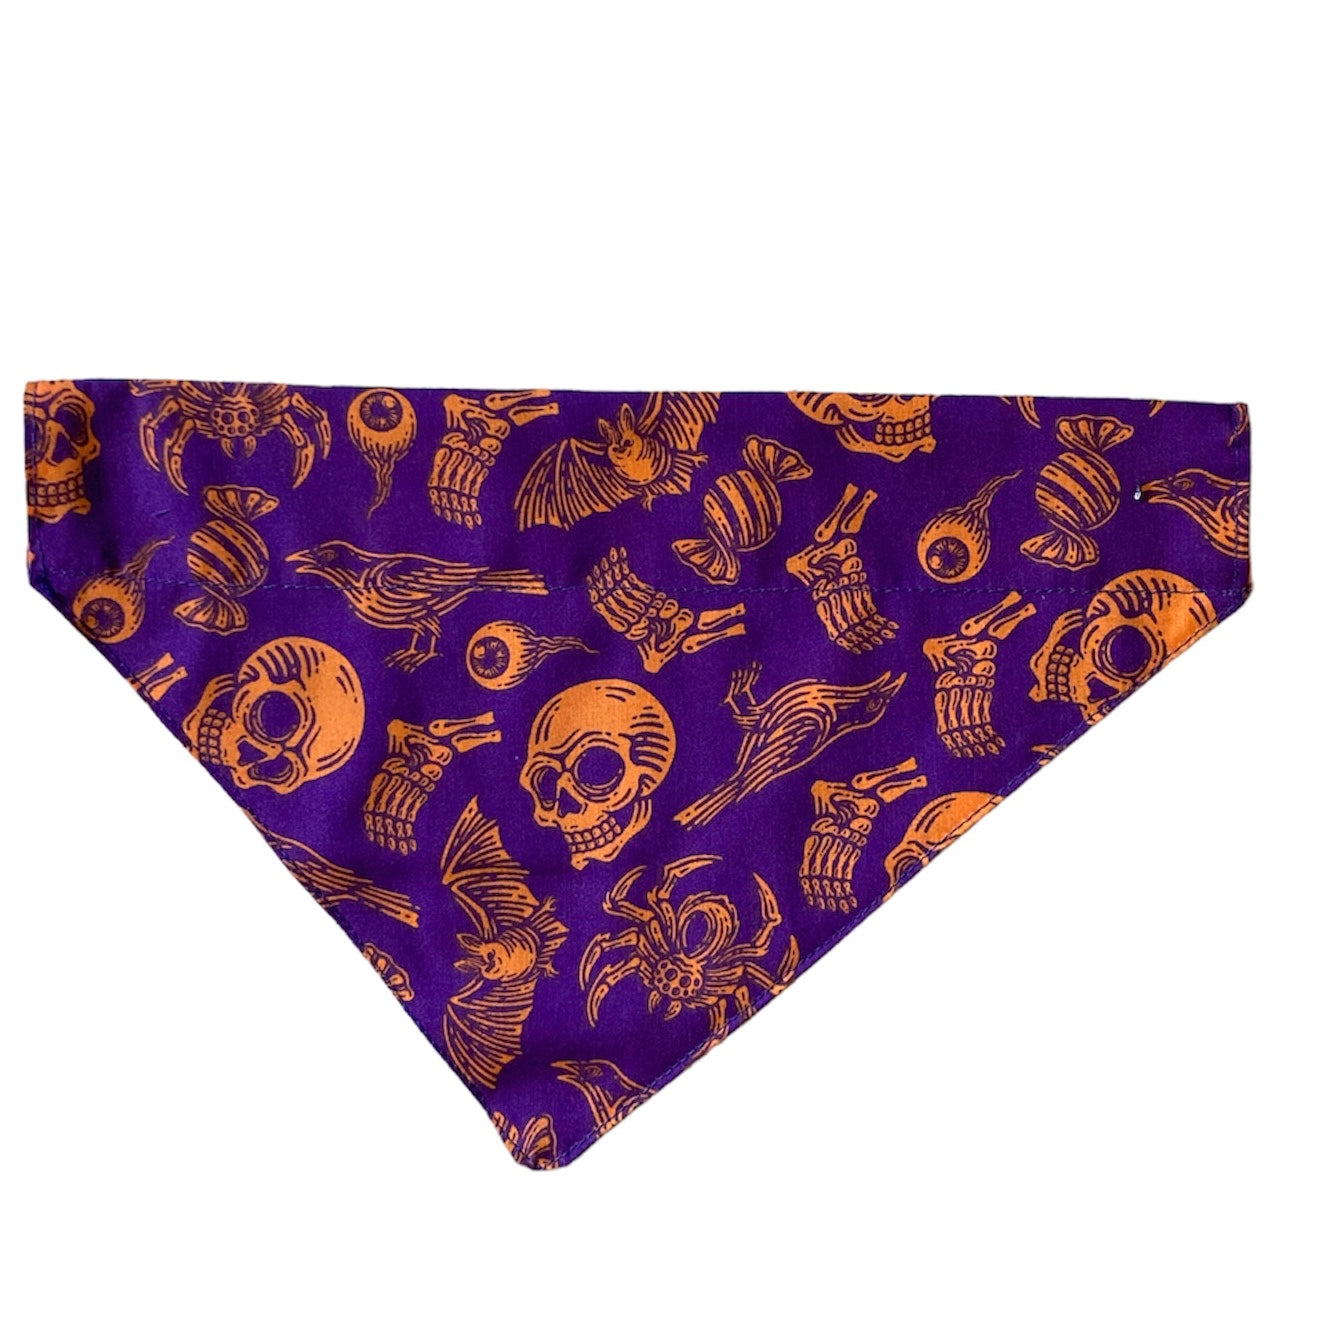 Purple and Orange Halloween dog bandana